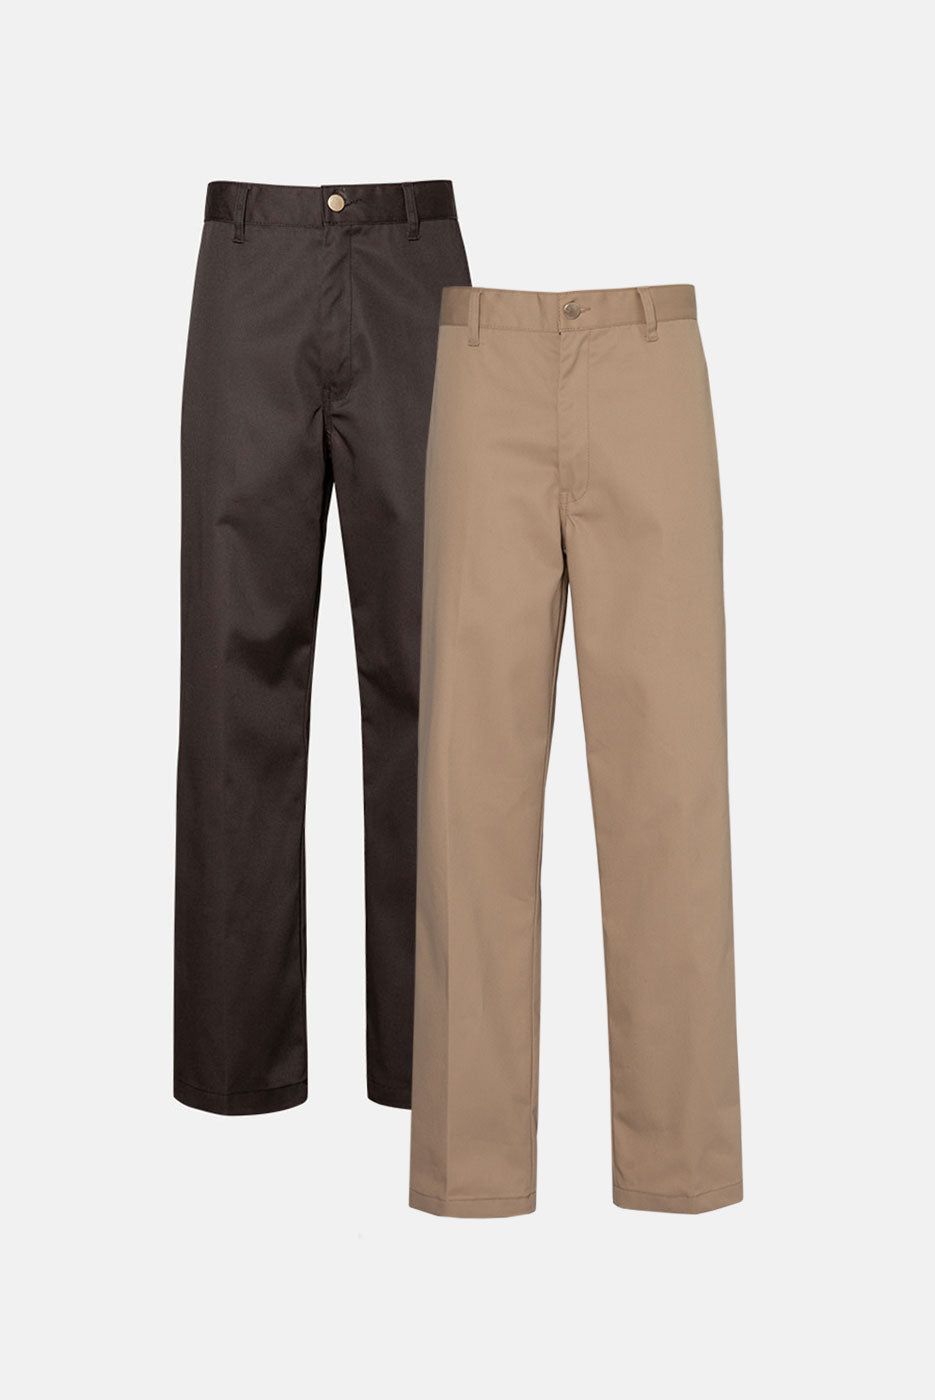 Shop Pants – Elwood Clothing